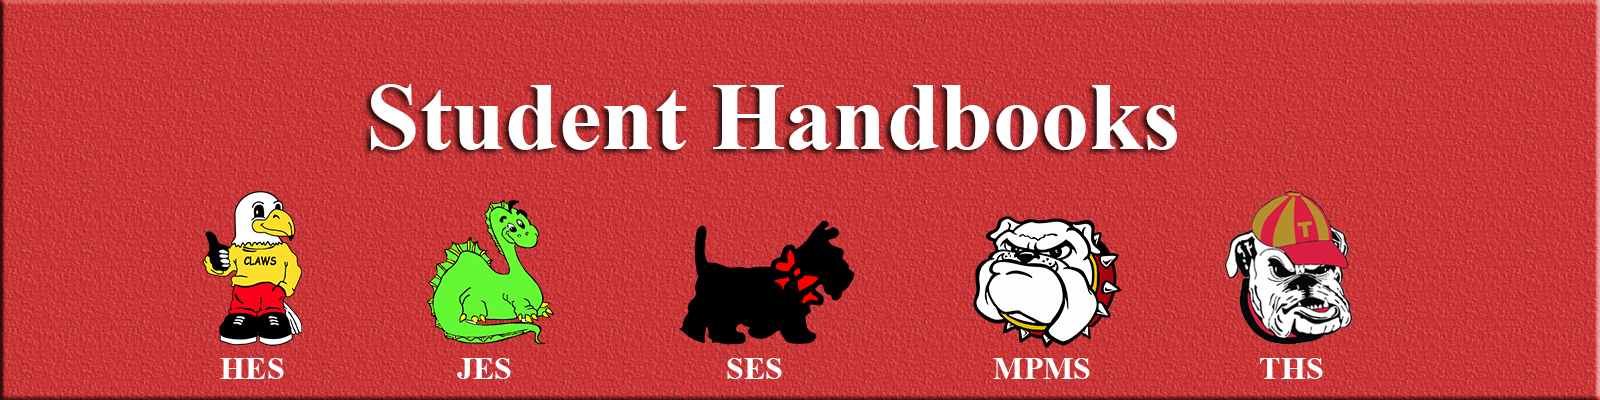 Student Handbook Banner